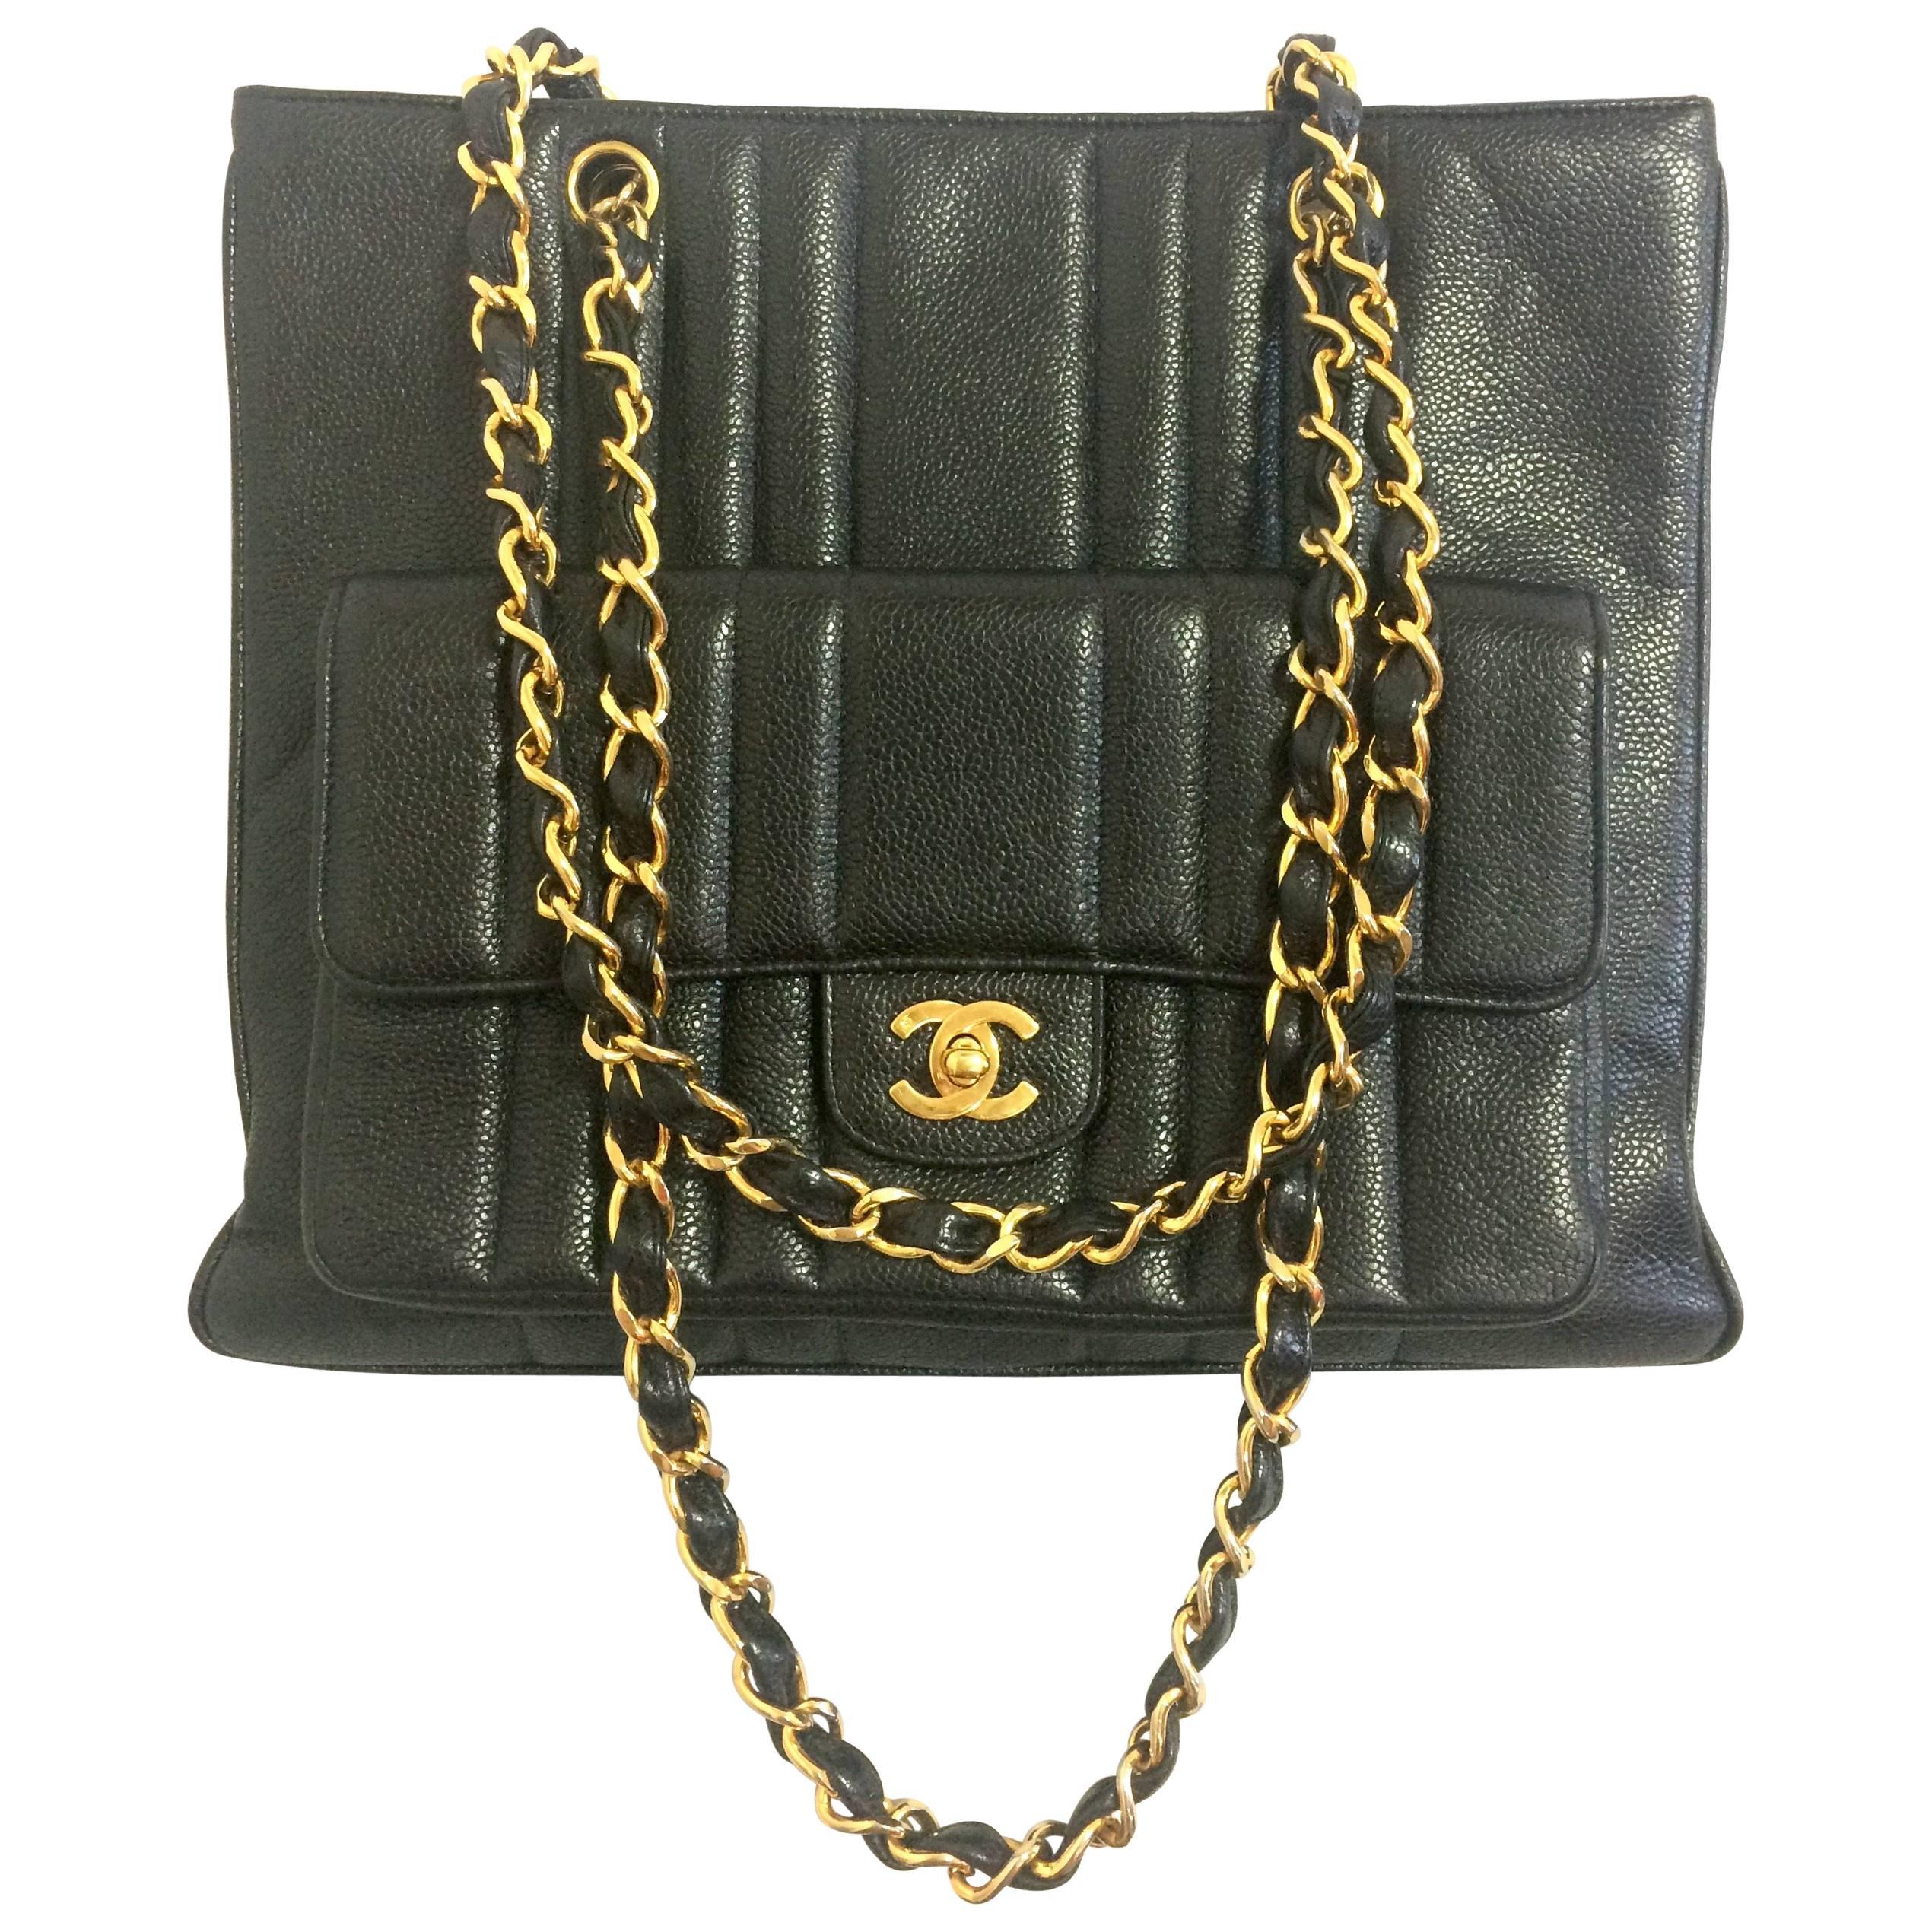 Vintage CHANEL rare 2.55 combo design black caviar leather chain shoulder bag.